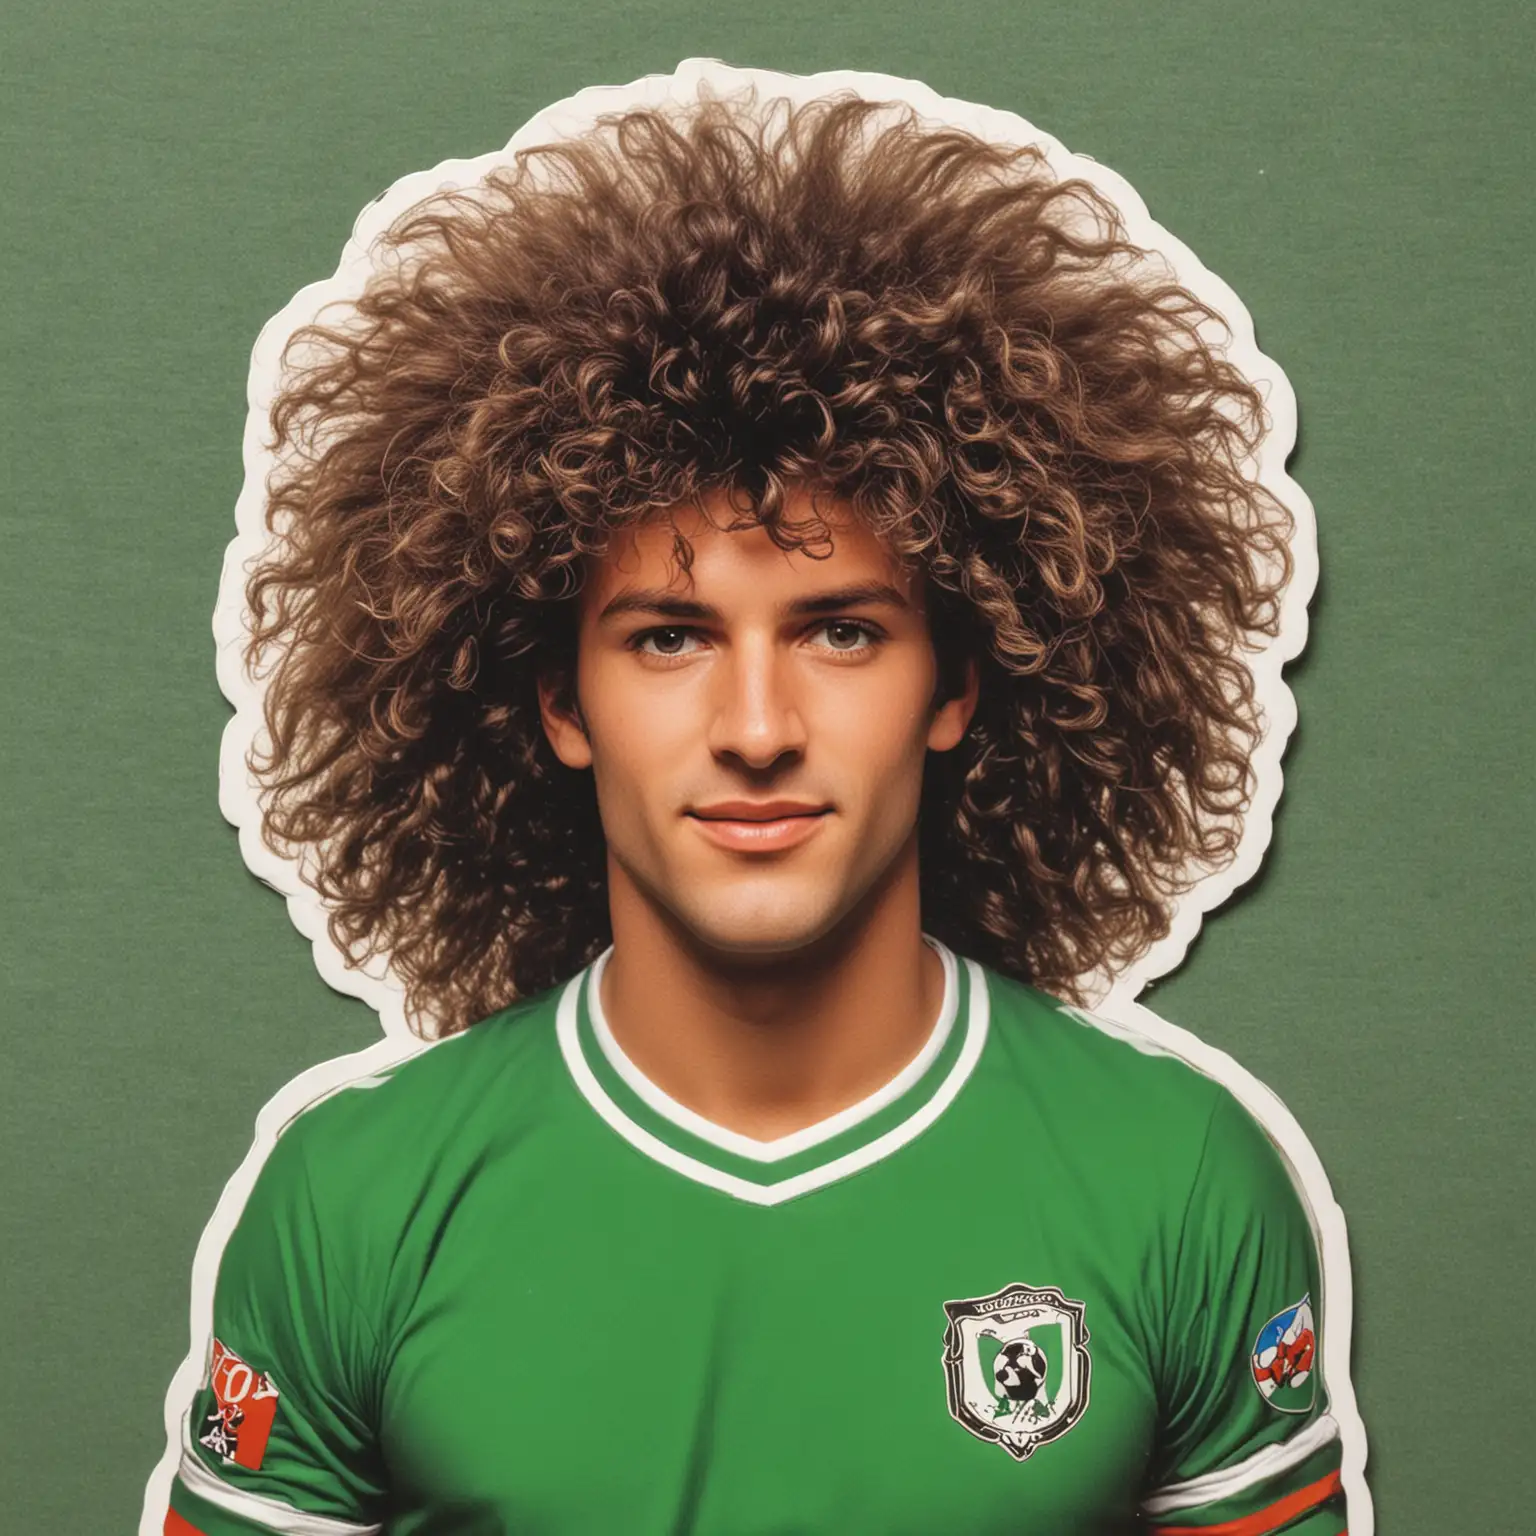 80's footballer, sticker book styler, big hair, green team kit